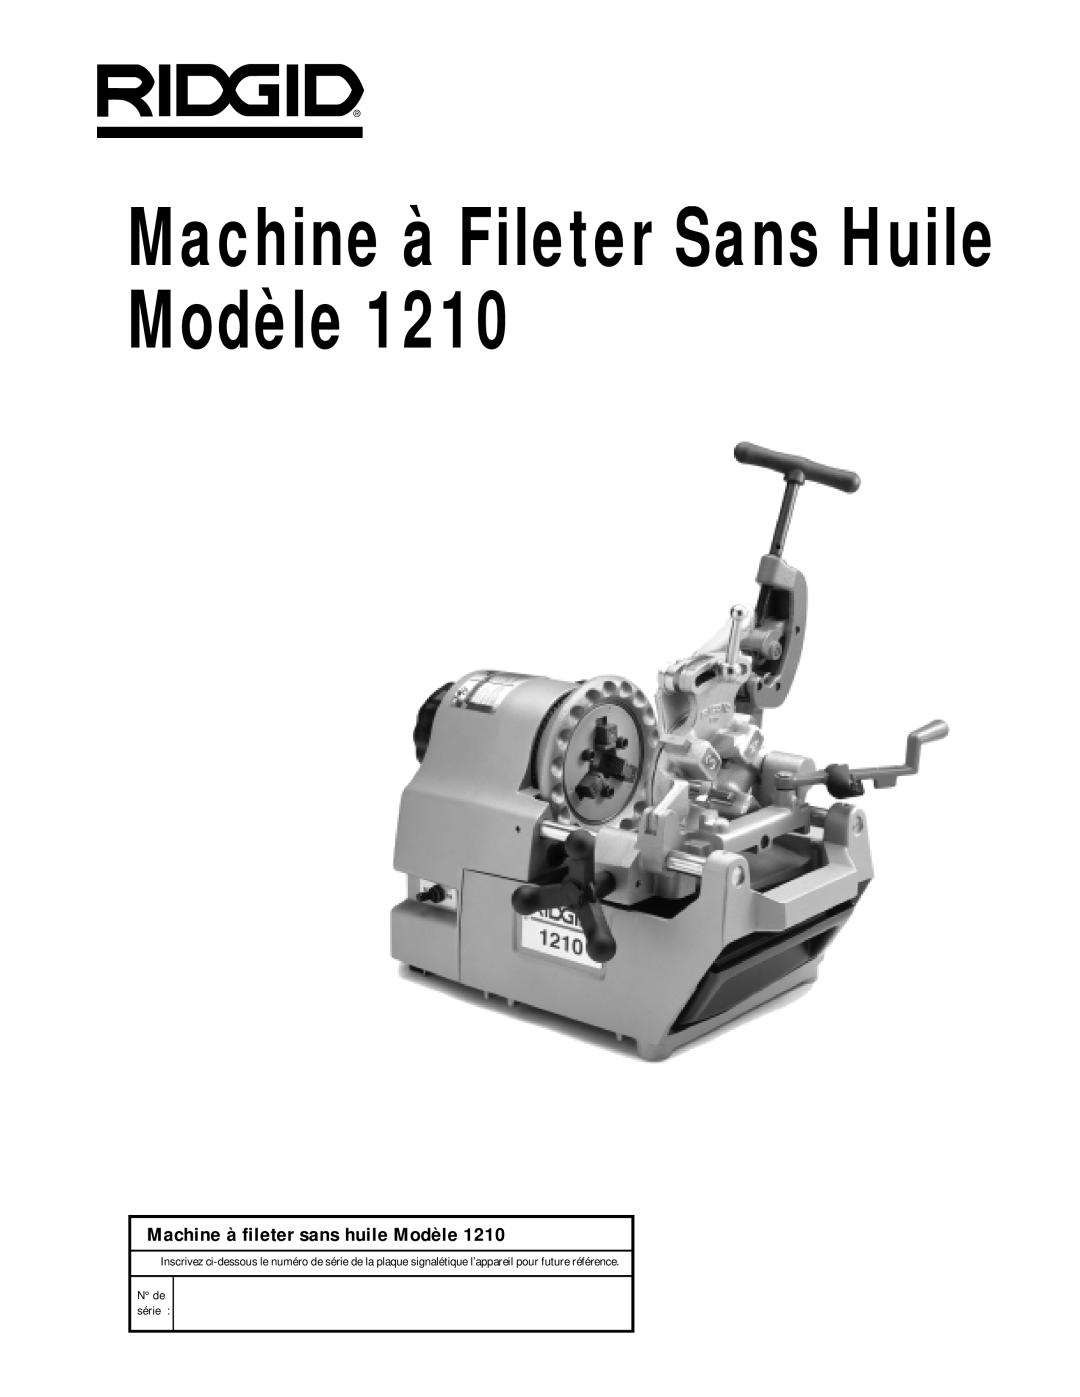 RIDGID 1210 manual Machine à Fileter Sans Huile Modèle, Machine à fileter sans huile Modèle, N de série 